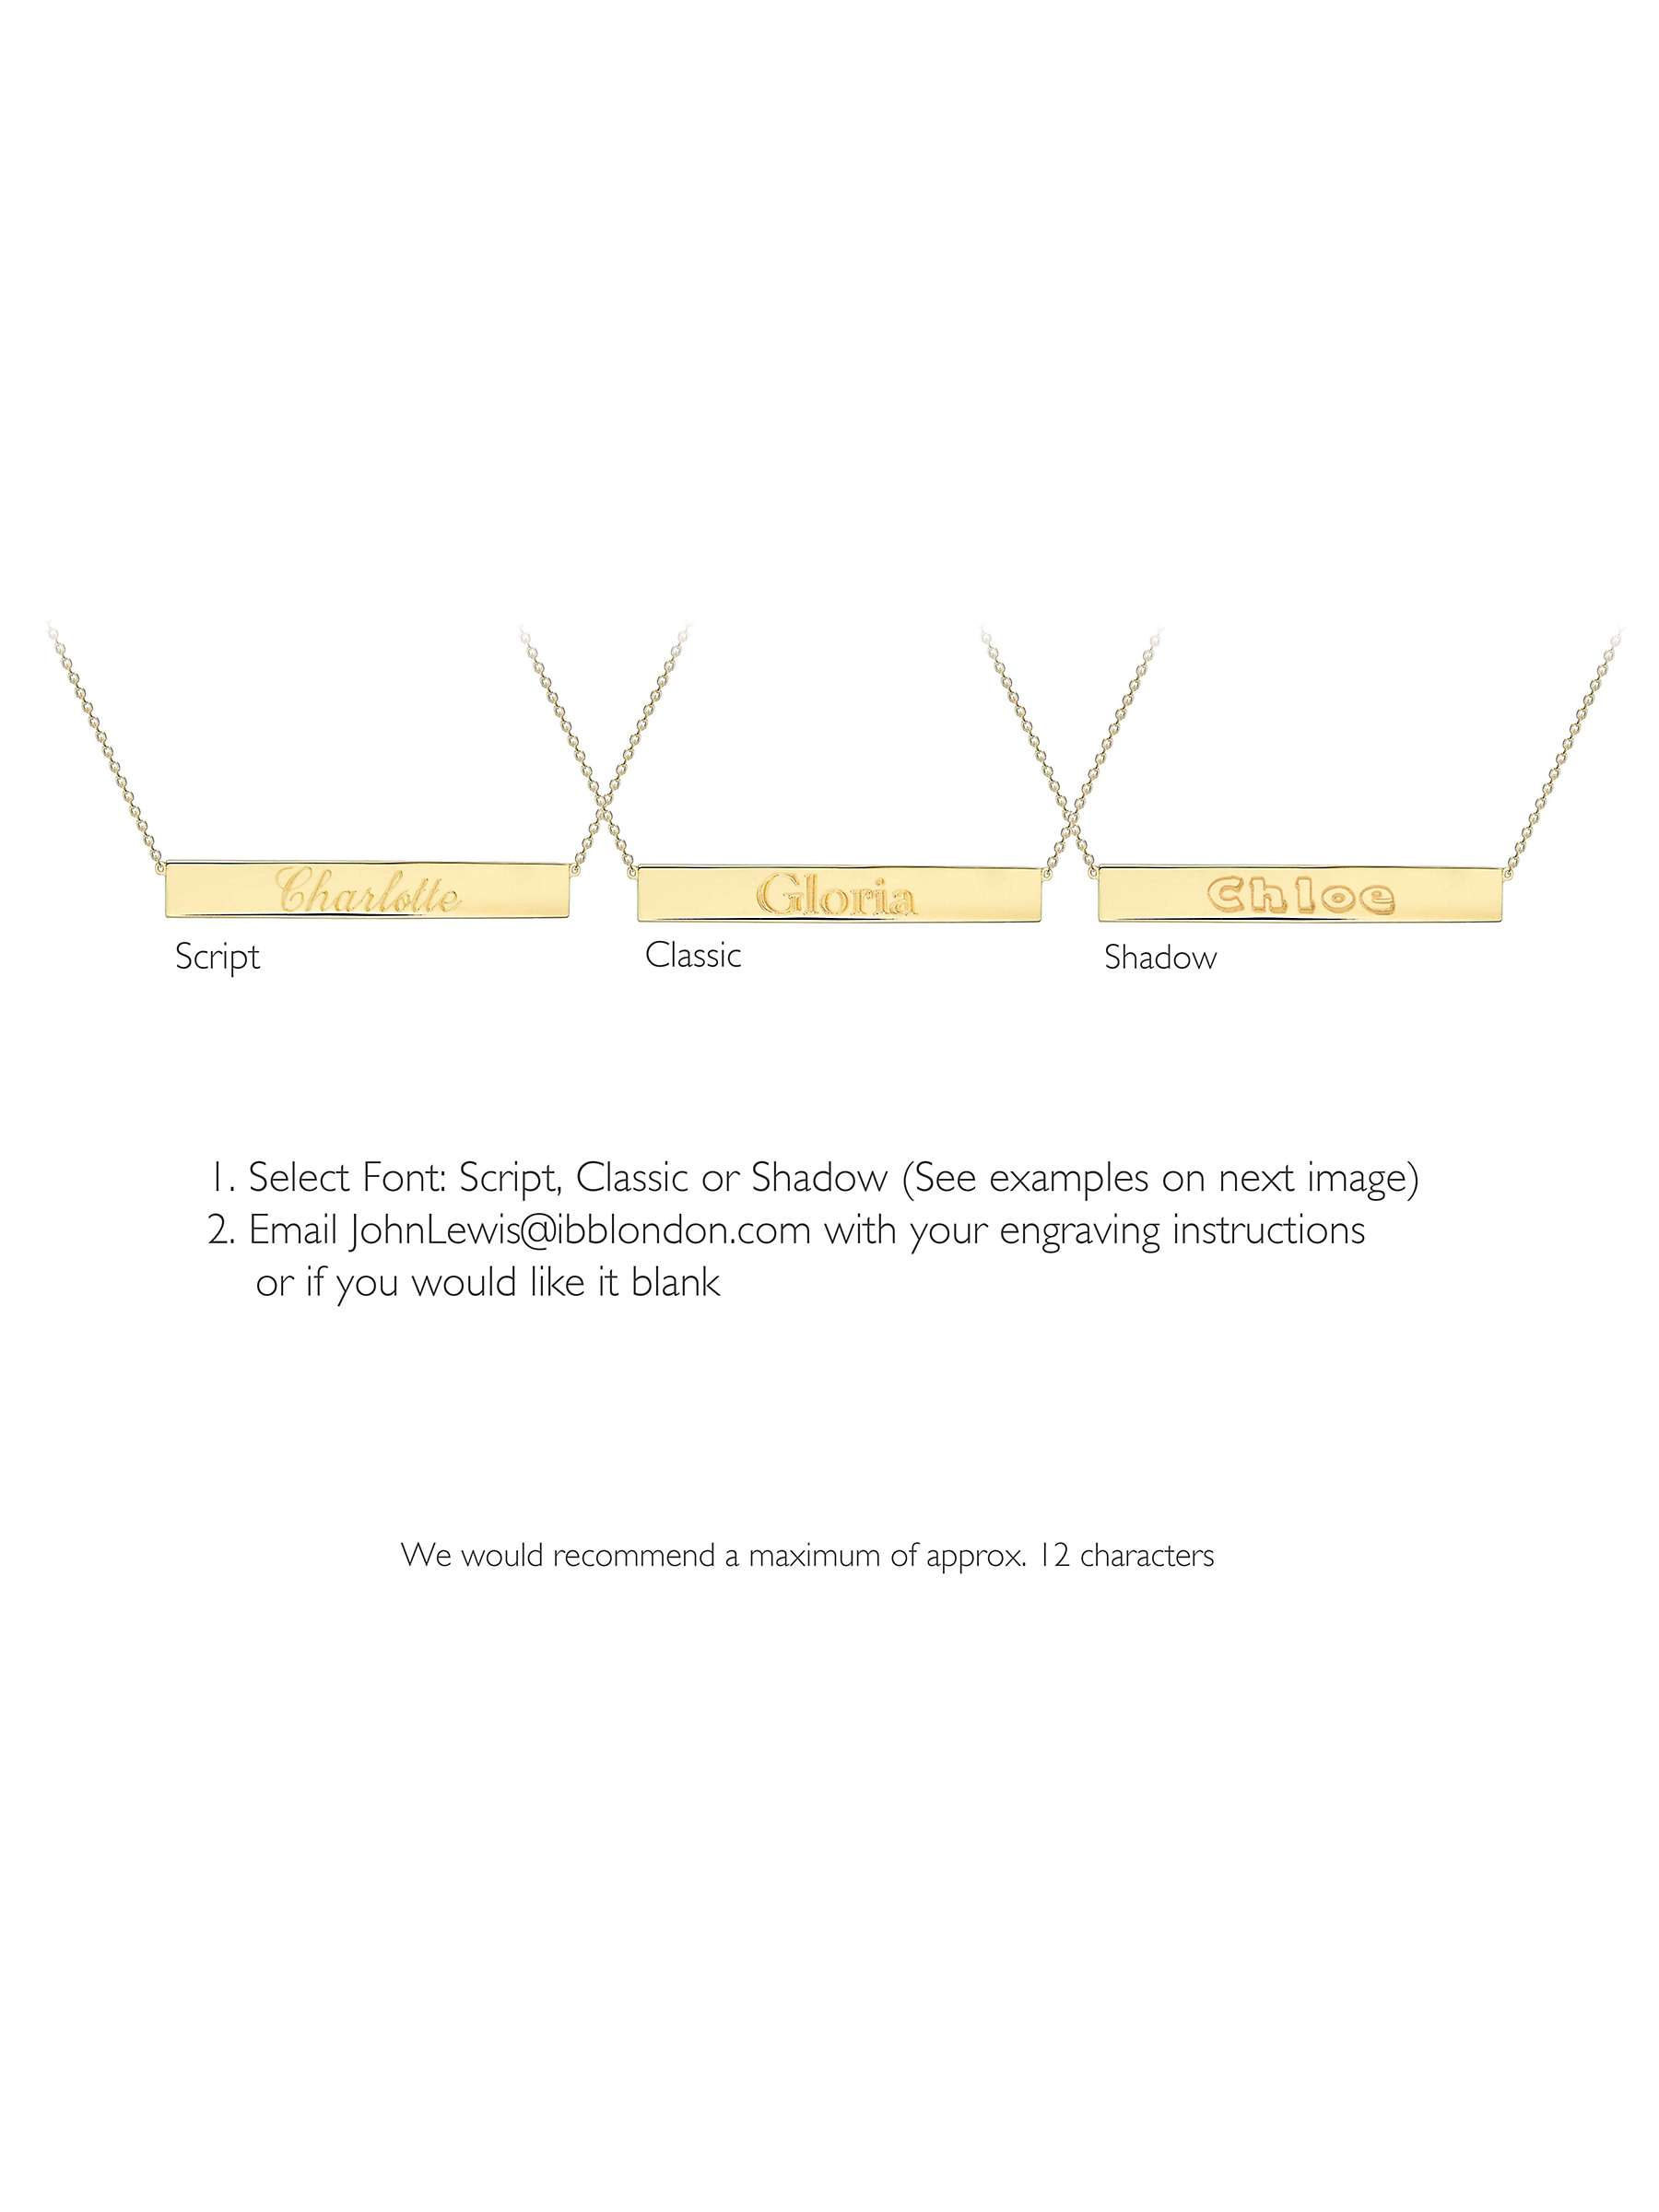 Buy IBB Personalised 9ct Gold Horizontal Bar Pendant Necklace Online at johnlewis.com